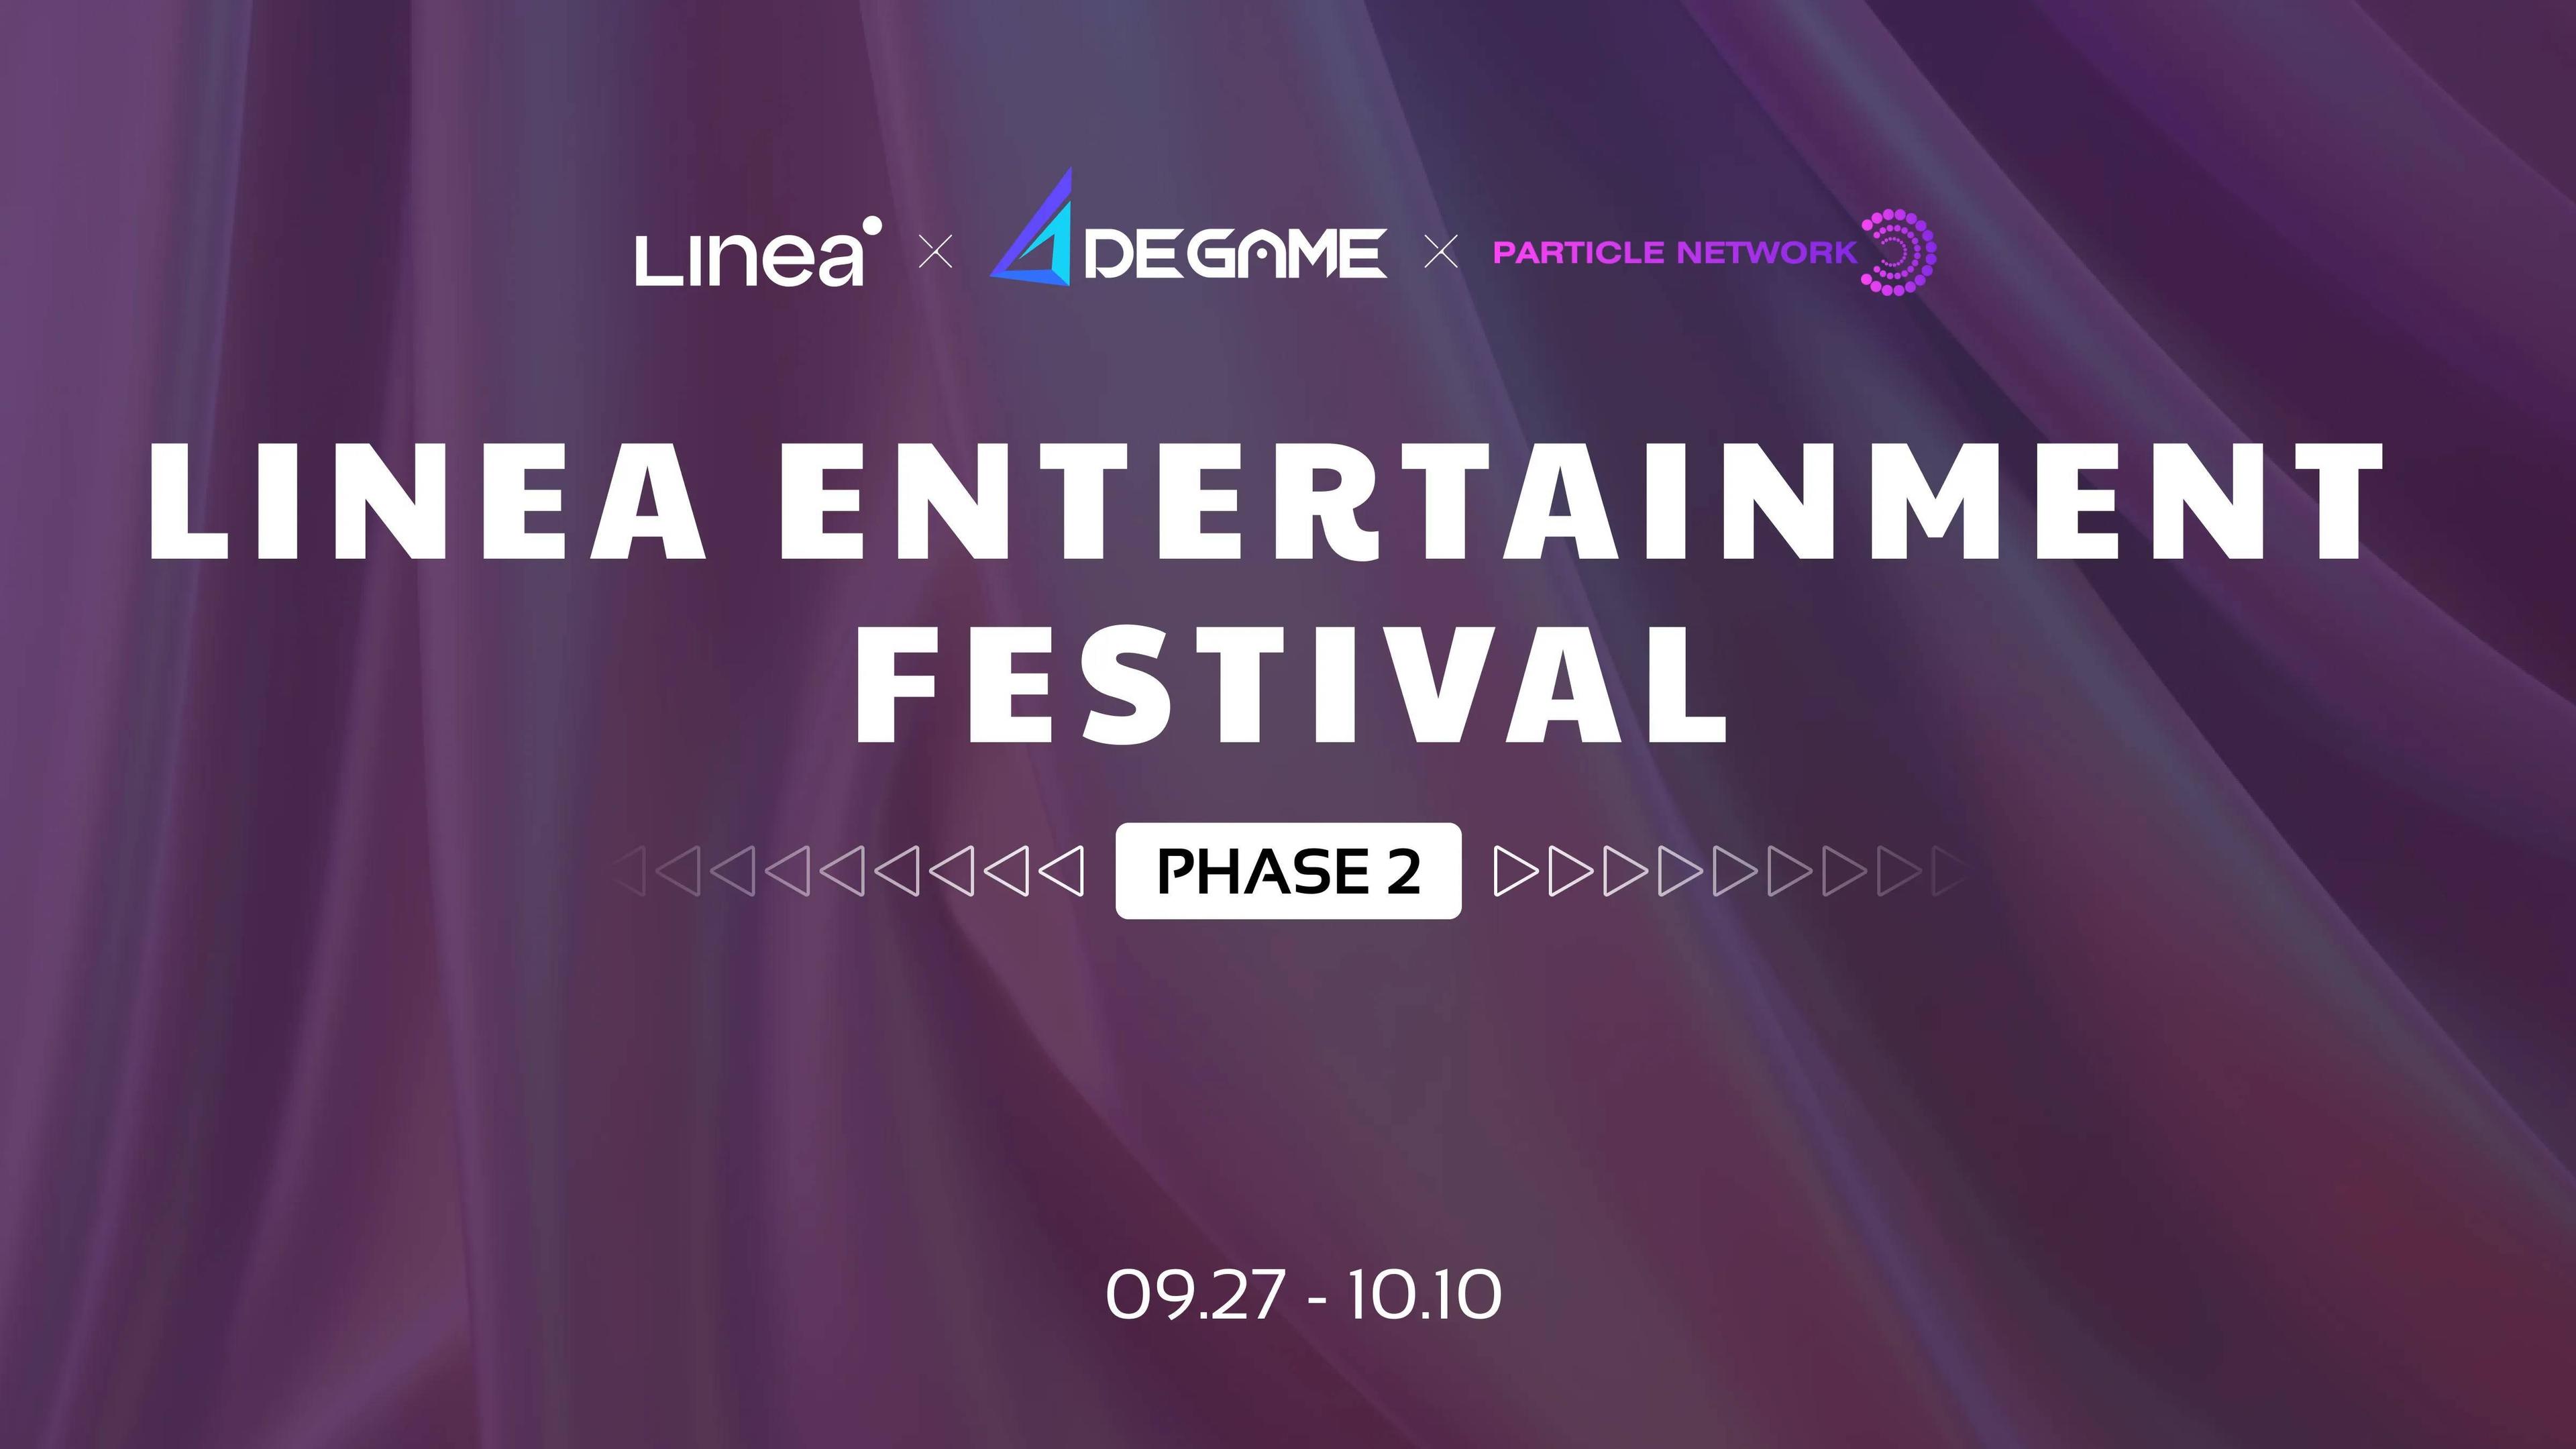 linea-entertainment-festival-giai-doan-2-khoi-dong-voi-chu-de-sail-the-linea-voyage-earn-voyage-xps